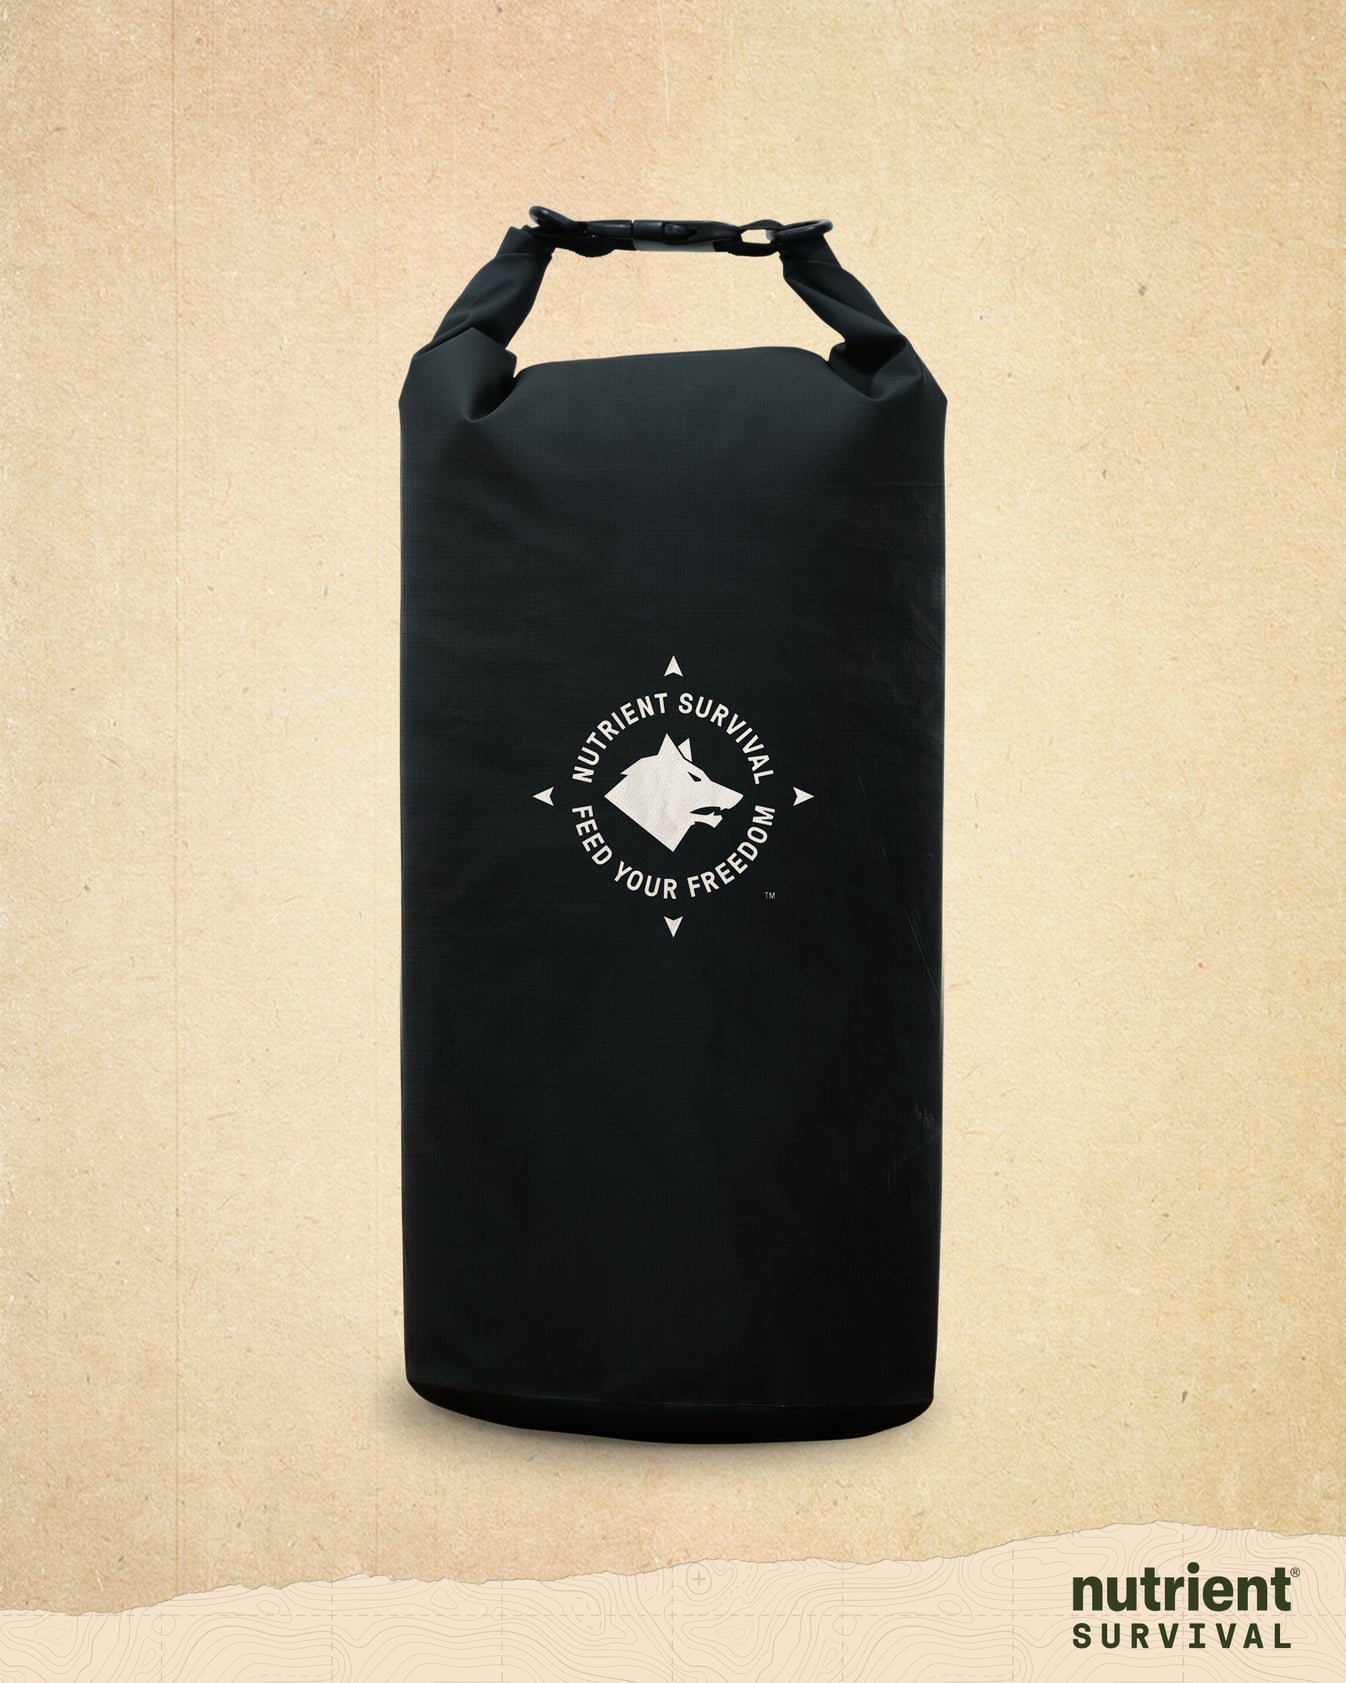 Gray/Black 3 Day Deluxe Emergency Survival Kit Bag 25 L Disaster Earthquake  | eBay